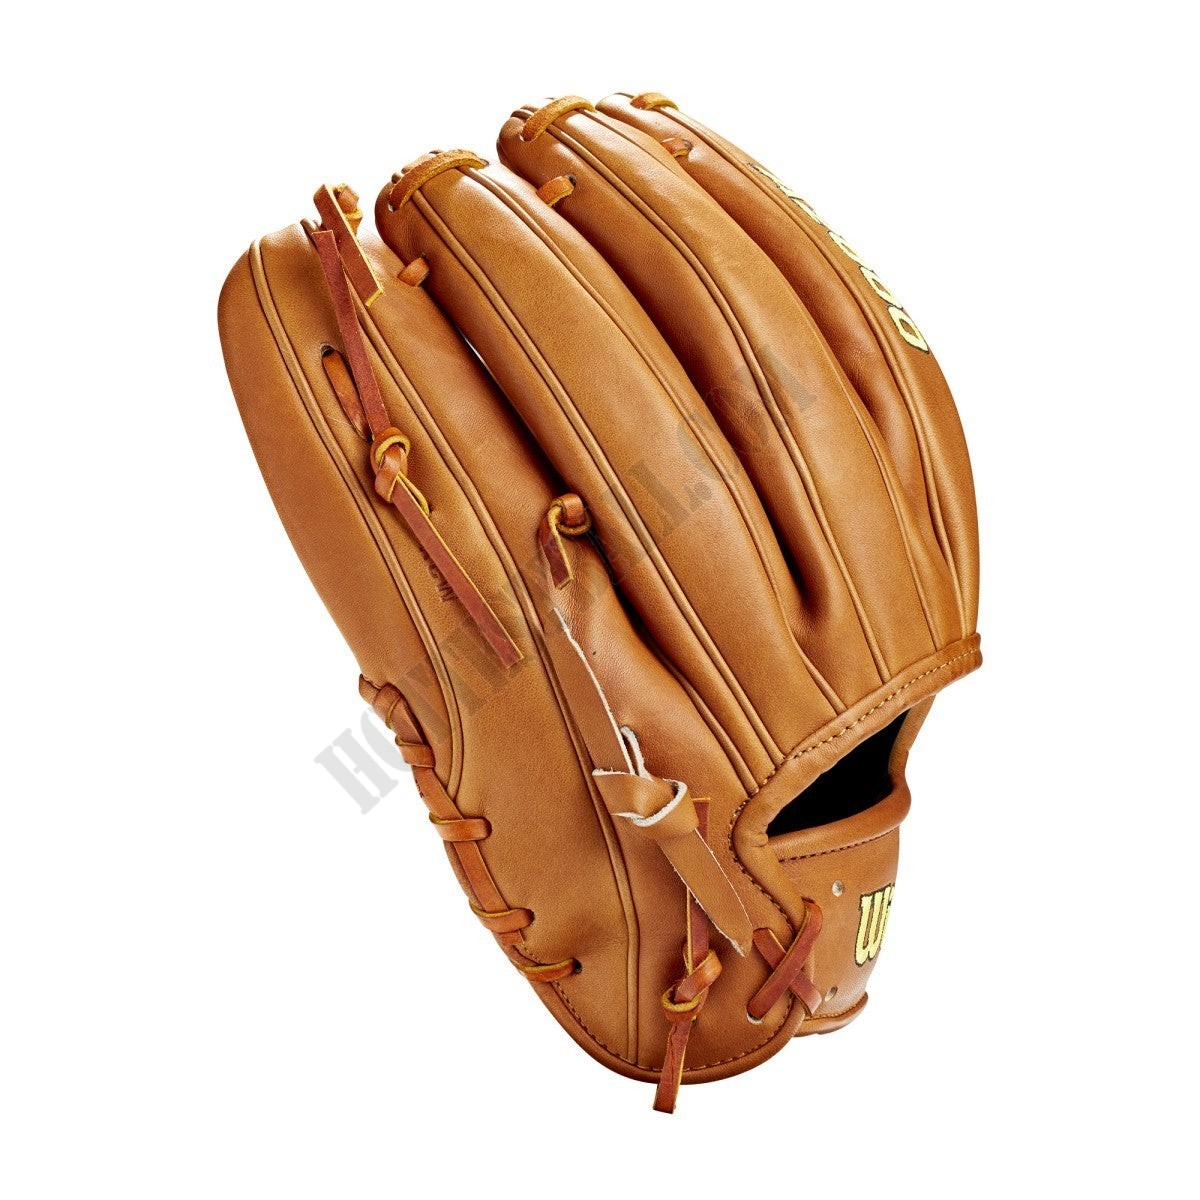 2021 A2000 1787 11.75" Infield Baseball Glove ● Wilson Promotions - -4